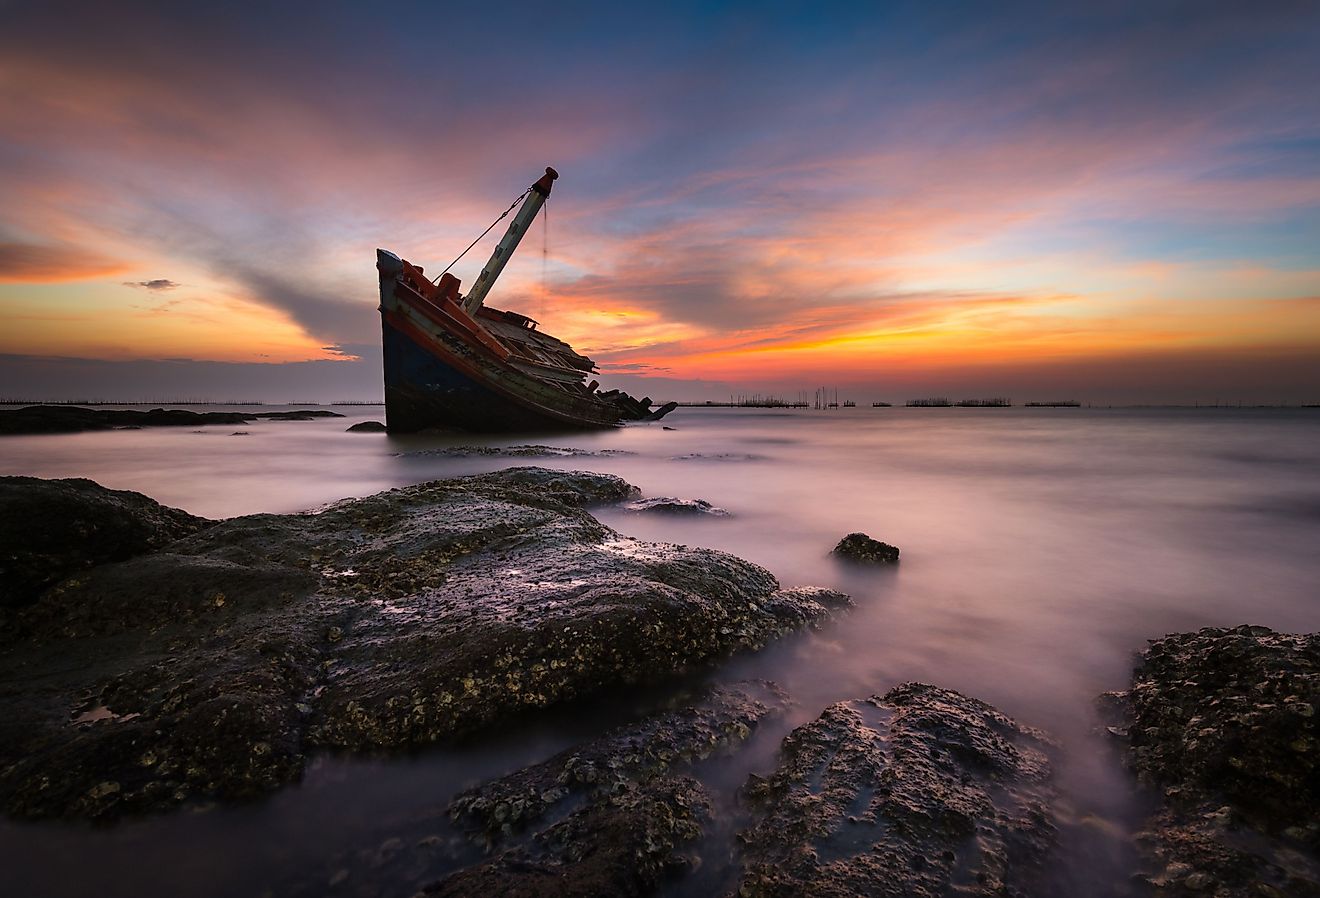 An old shipwreck. Image credit: Sorn340 Studio Images via Shutterstock